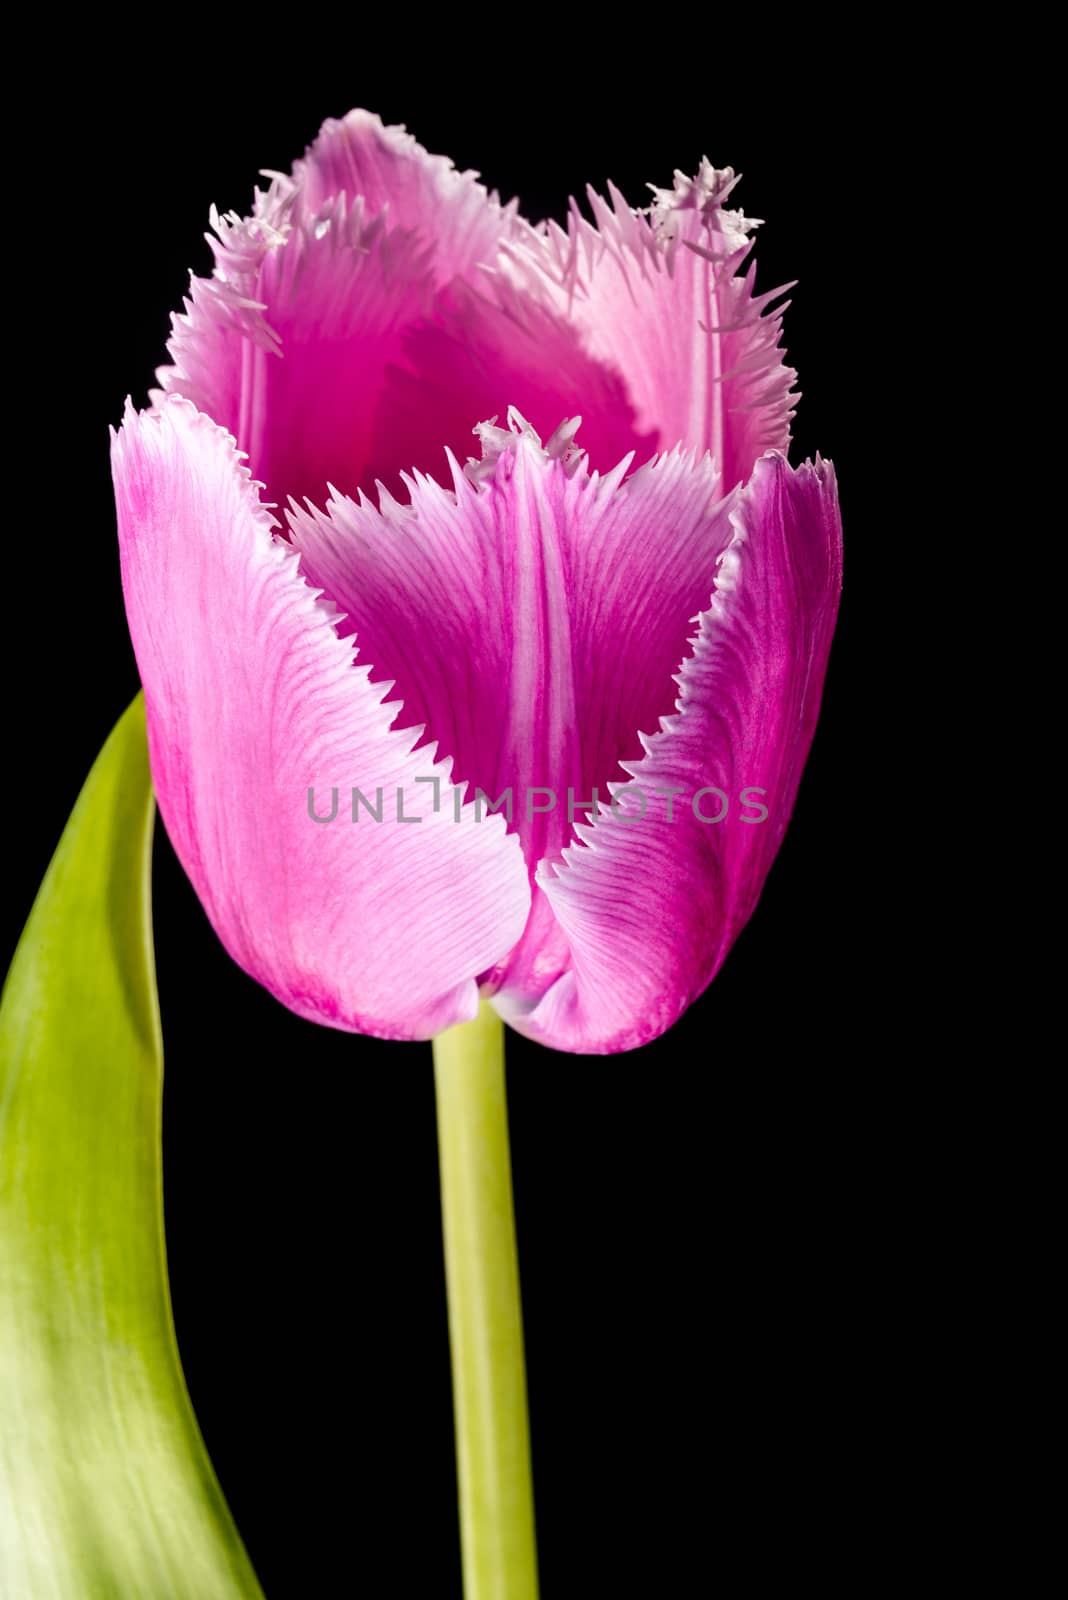 Pink Fringed Tulip on Black Background by MaxalTamor